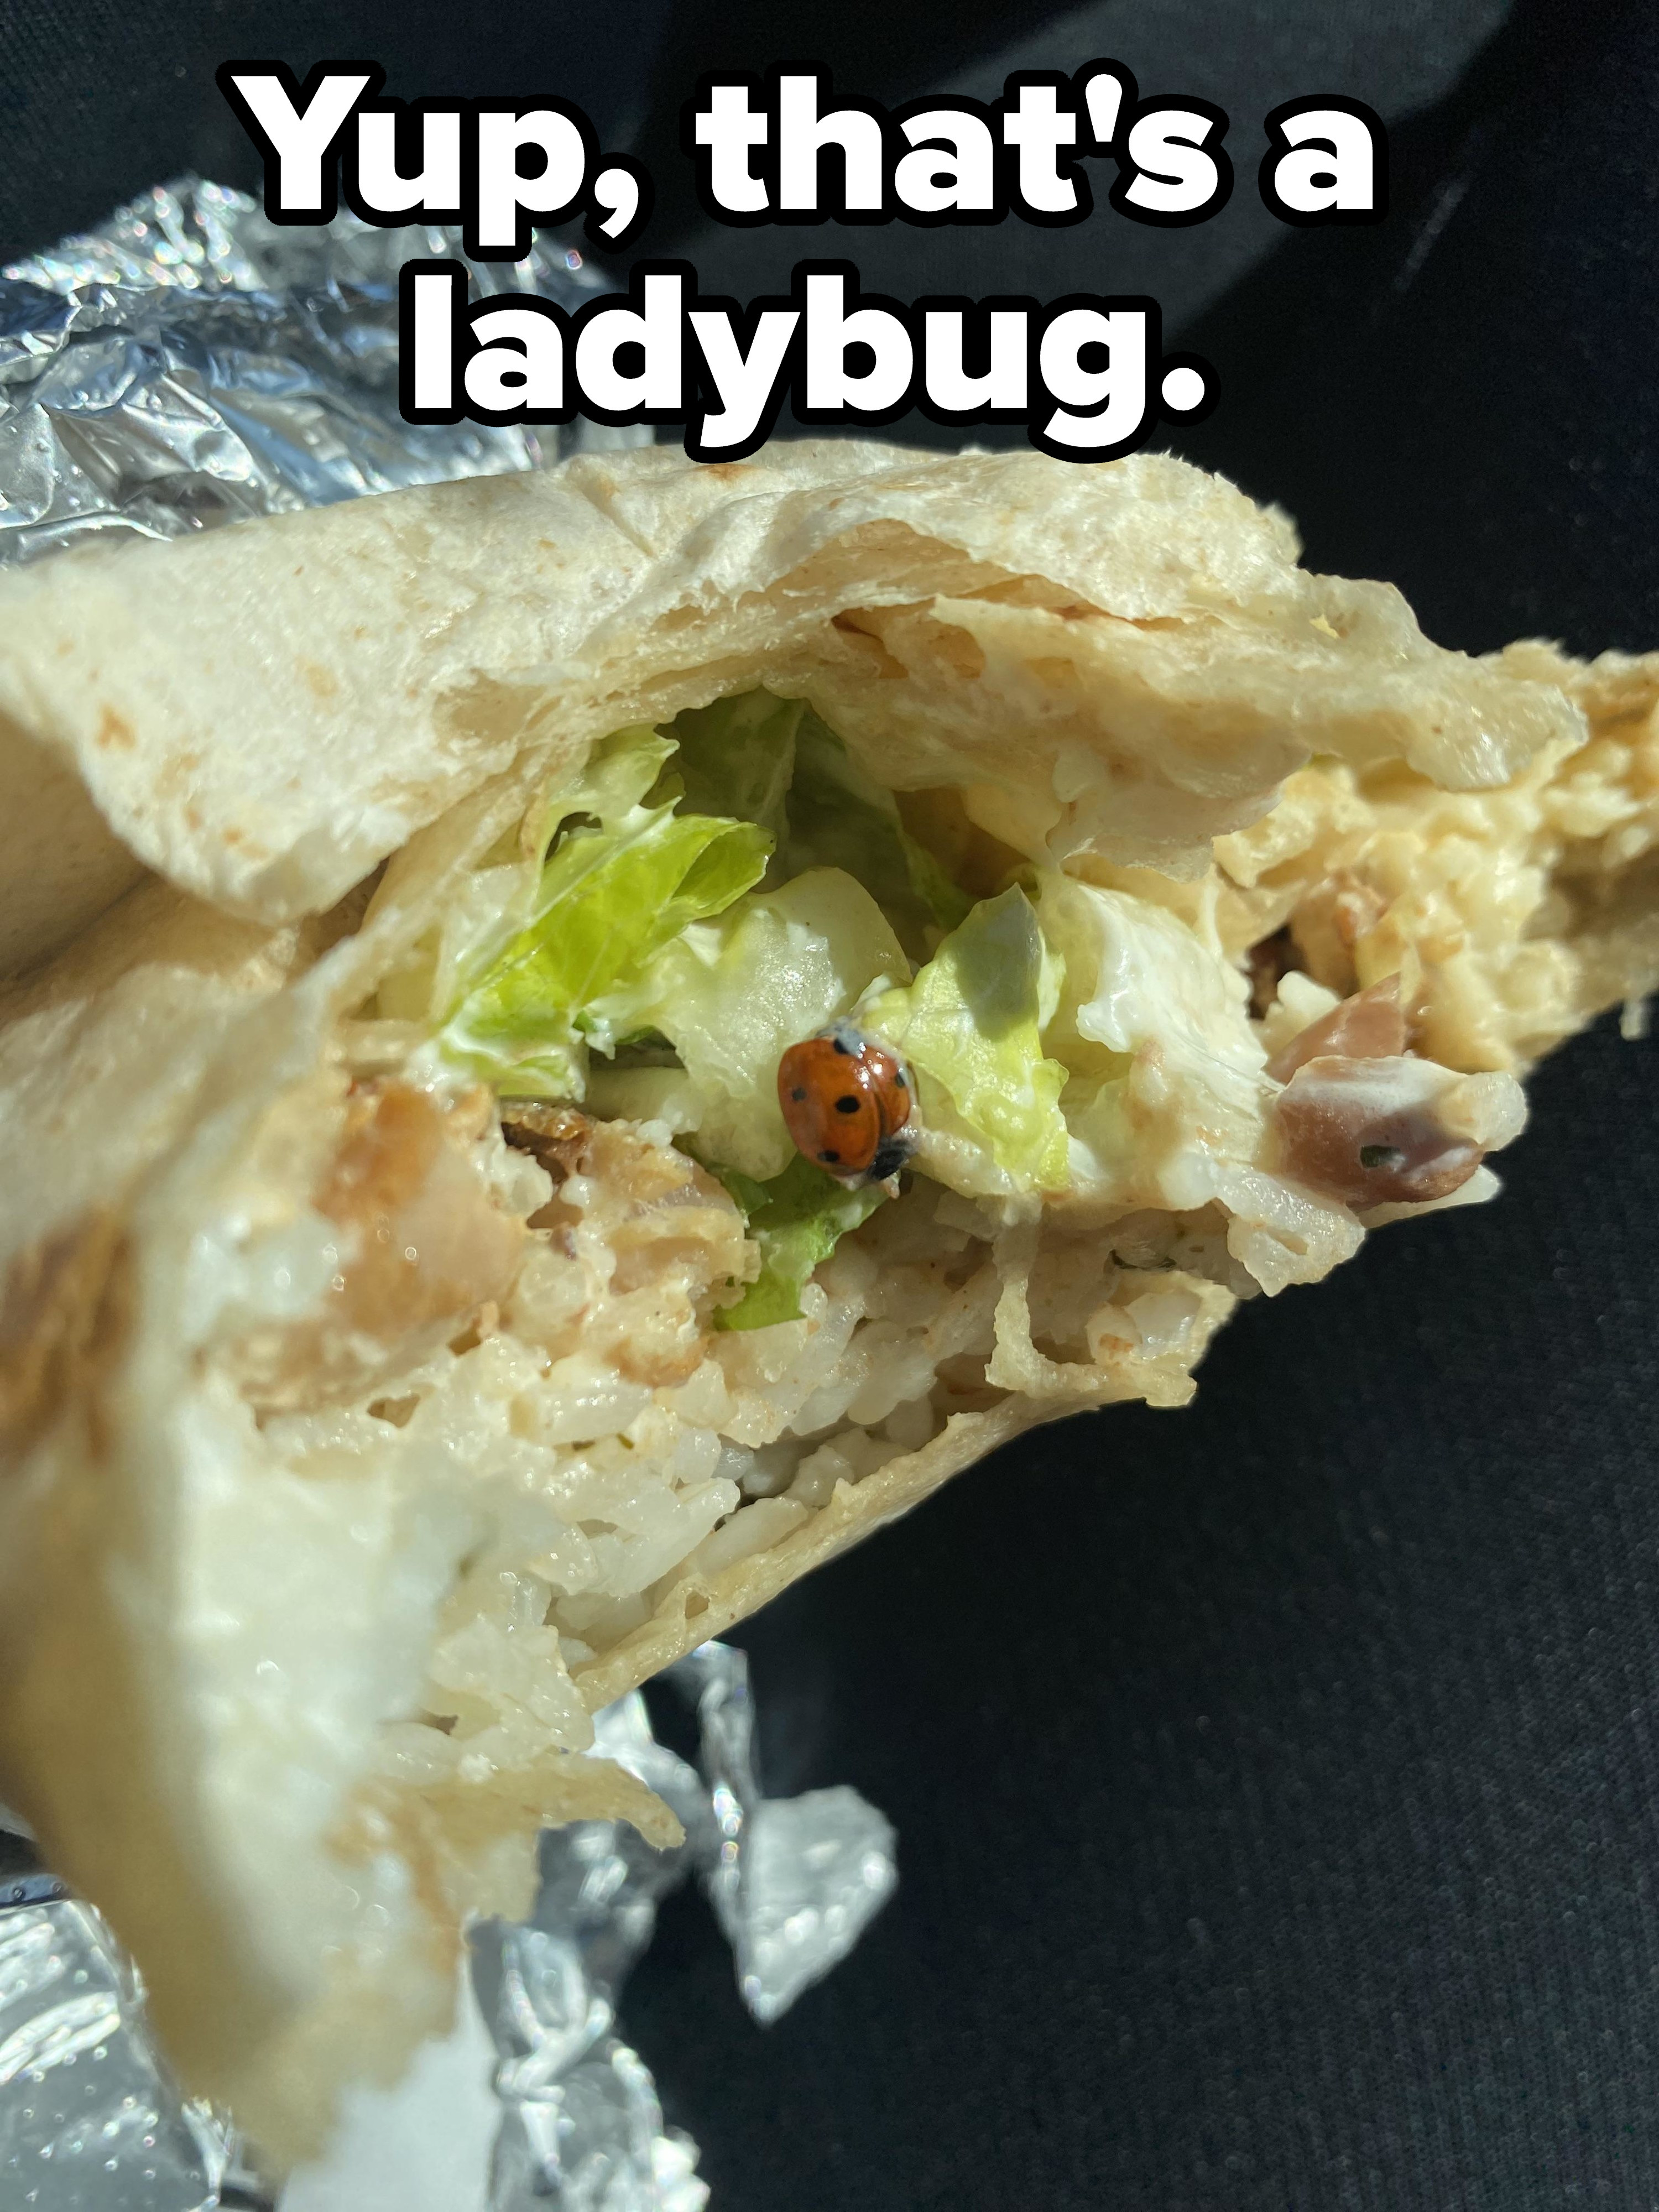 A ladybug inside a burrito